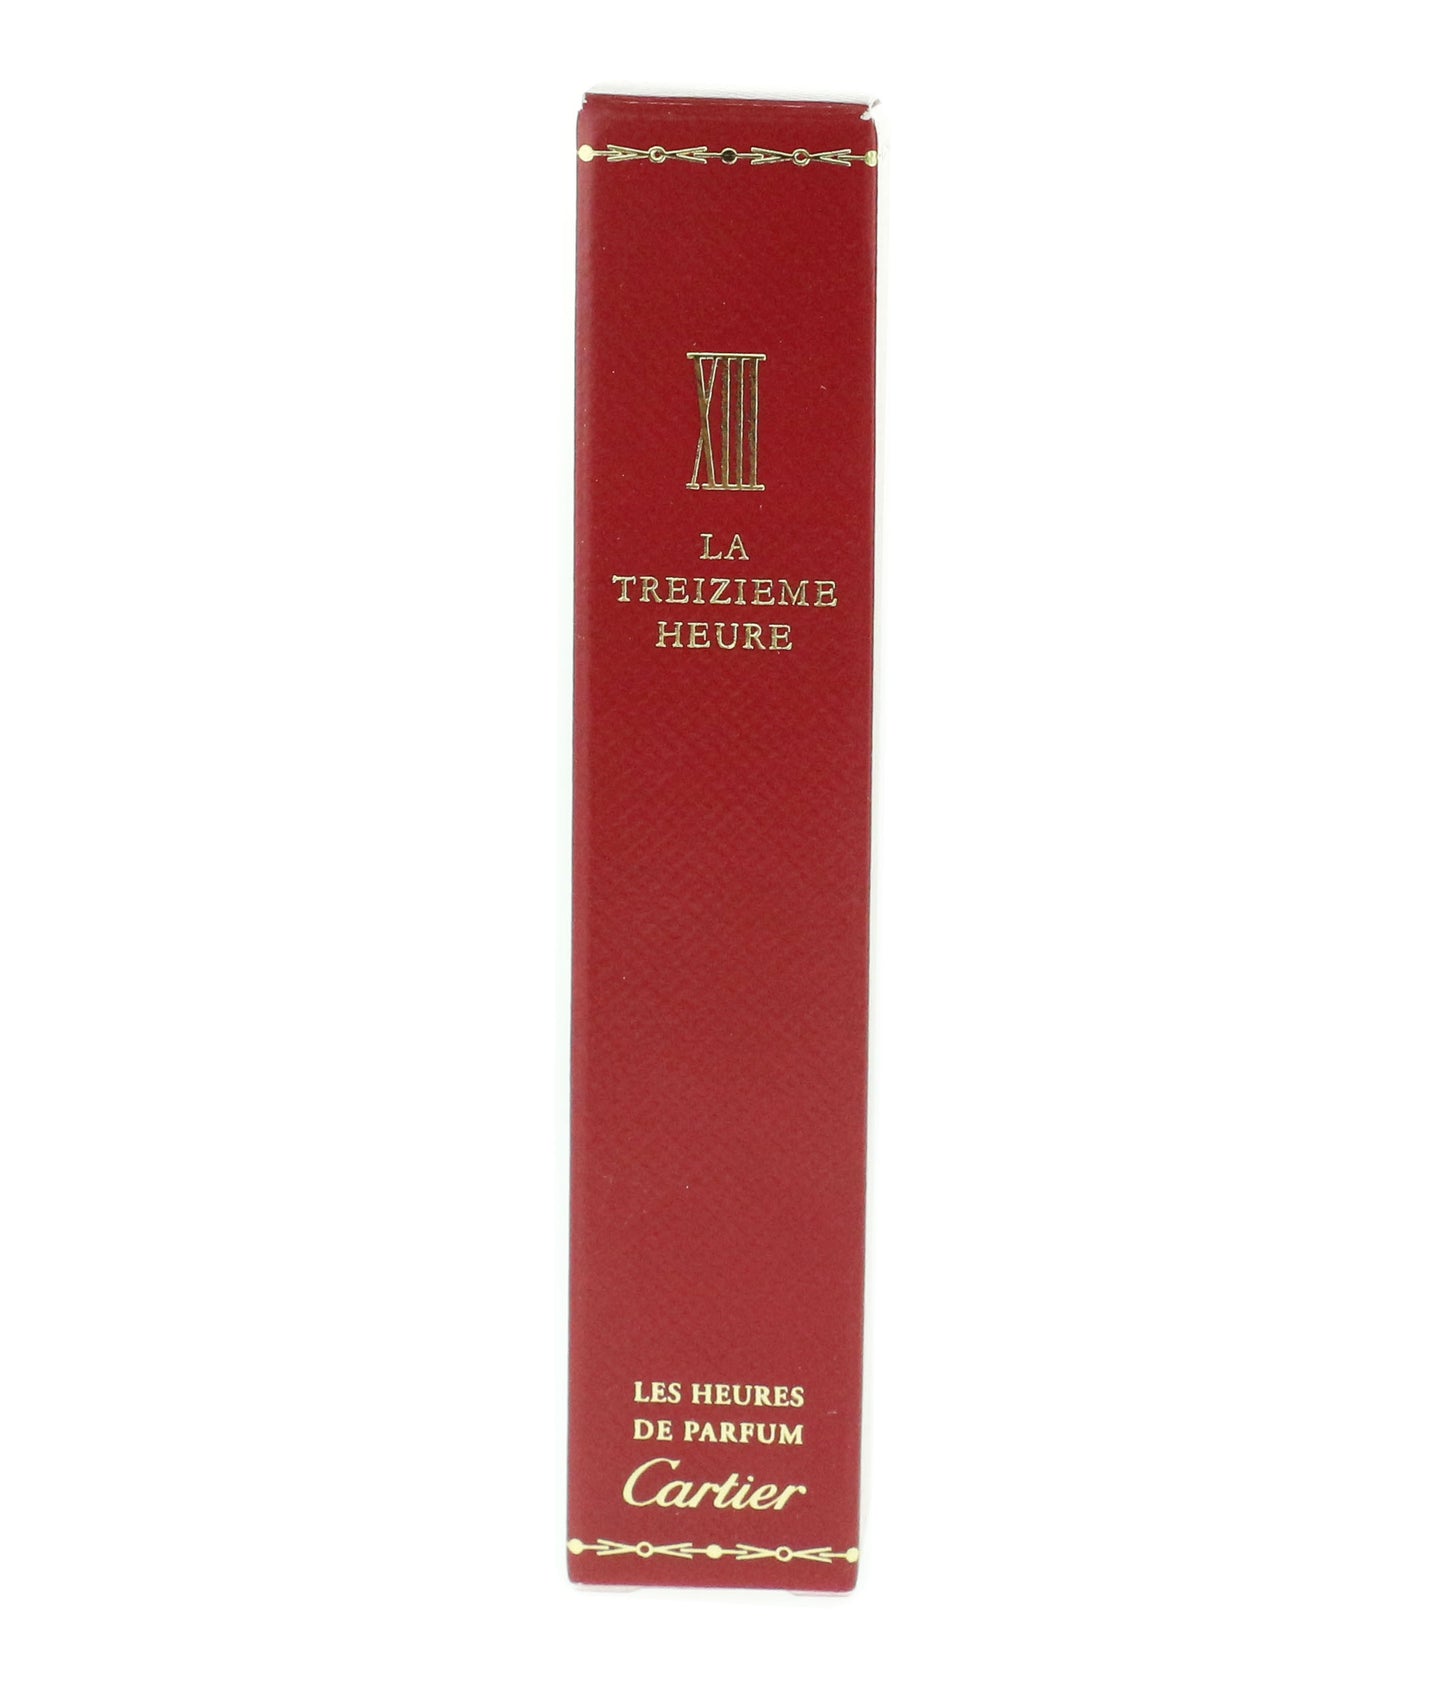 Cartier 'XIII LA Treizieme Heure' Eau De Parfum 3 X 0.13oz/4ml Splash New In Box